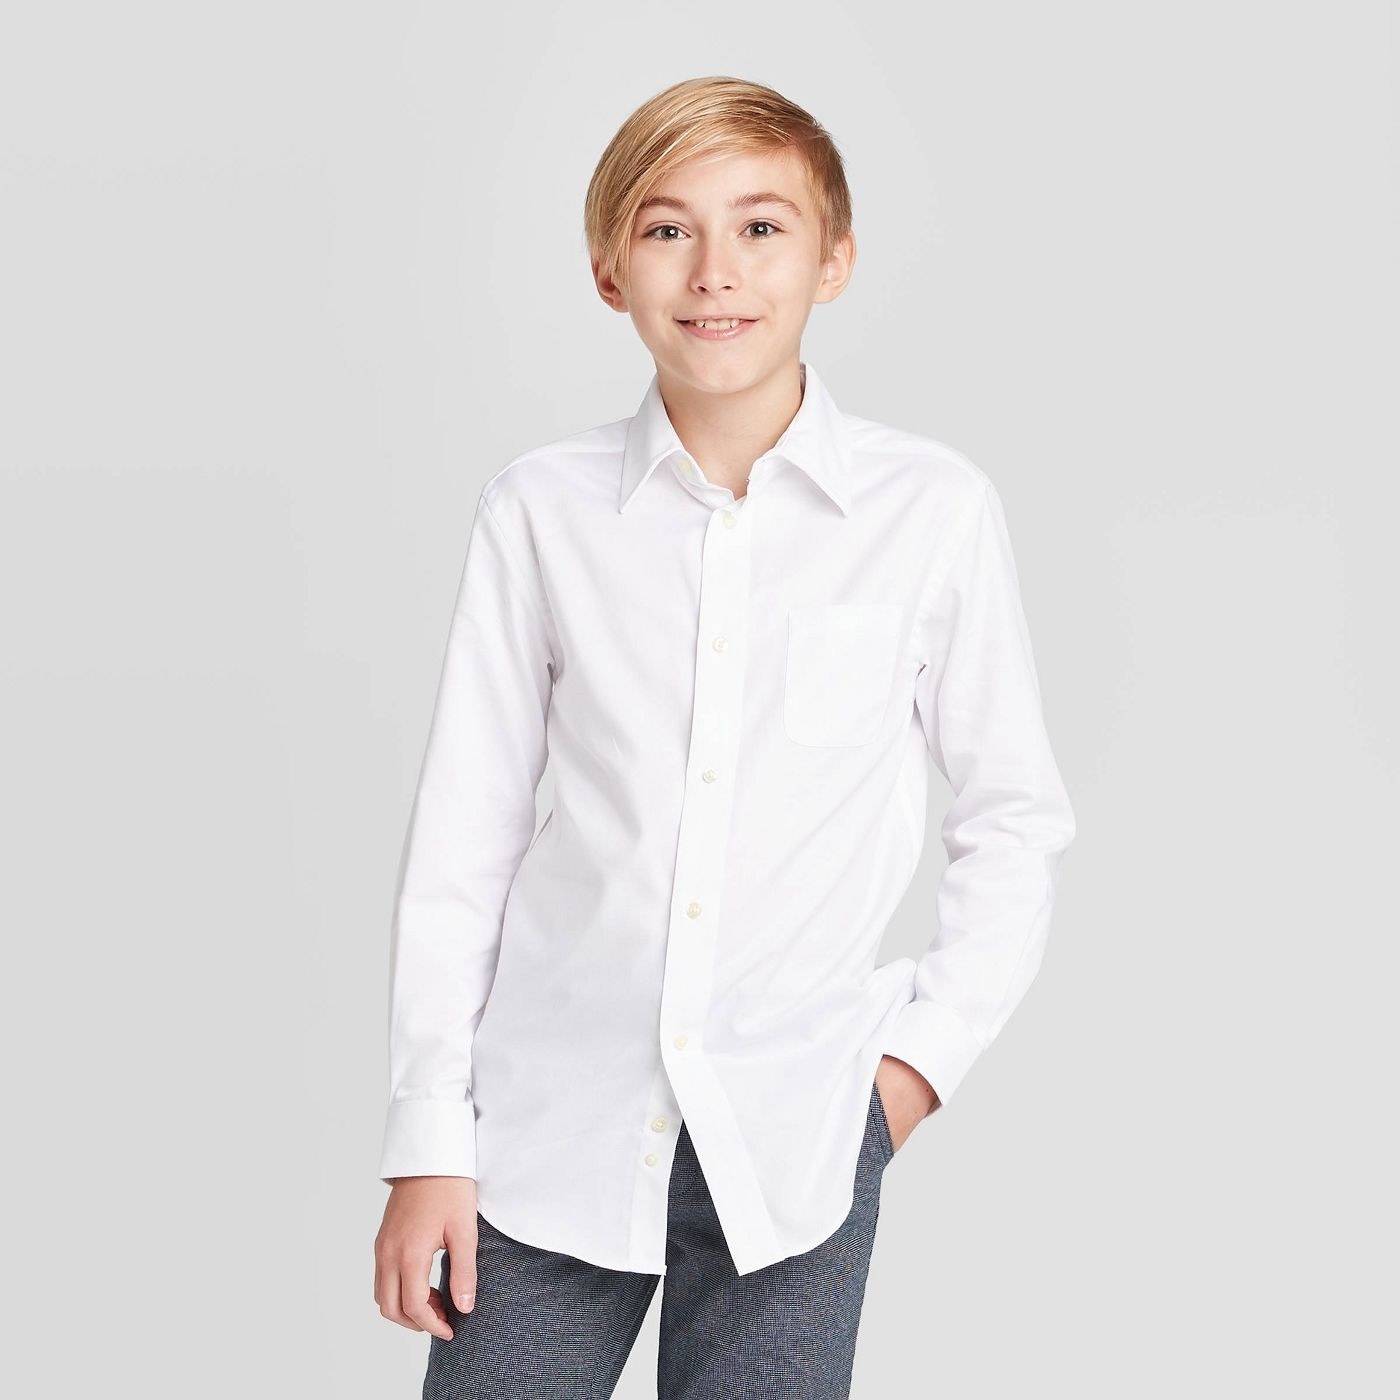 Kid in white shirt